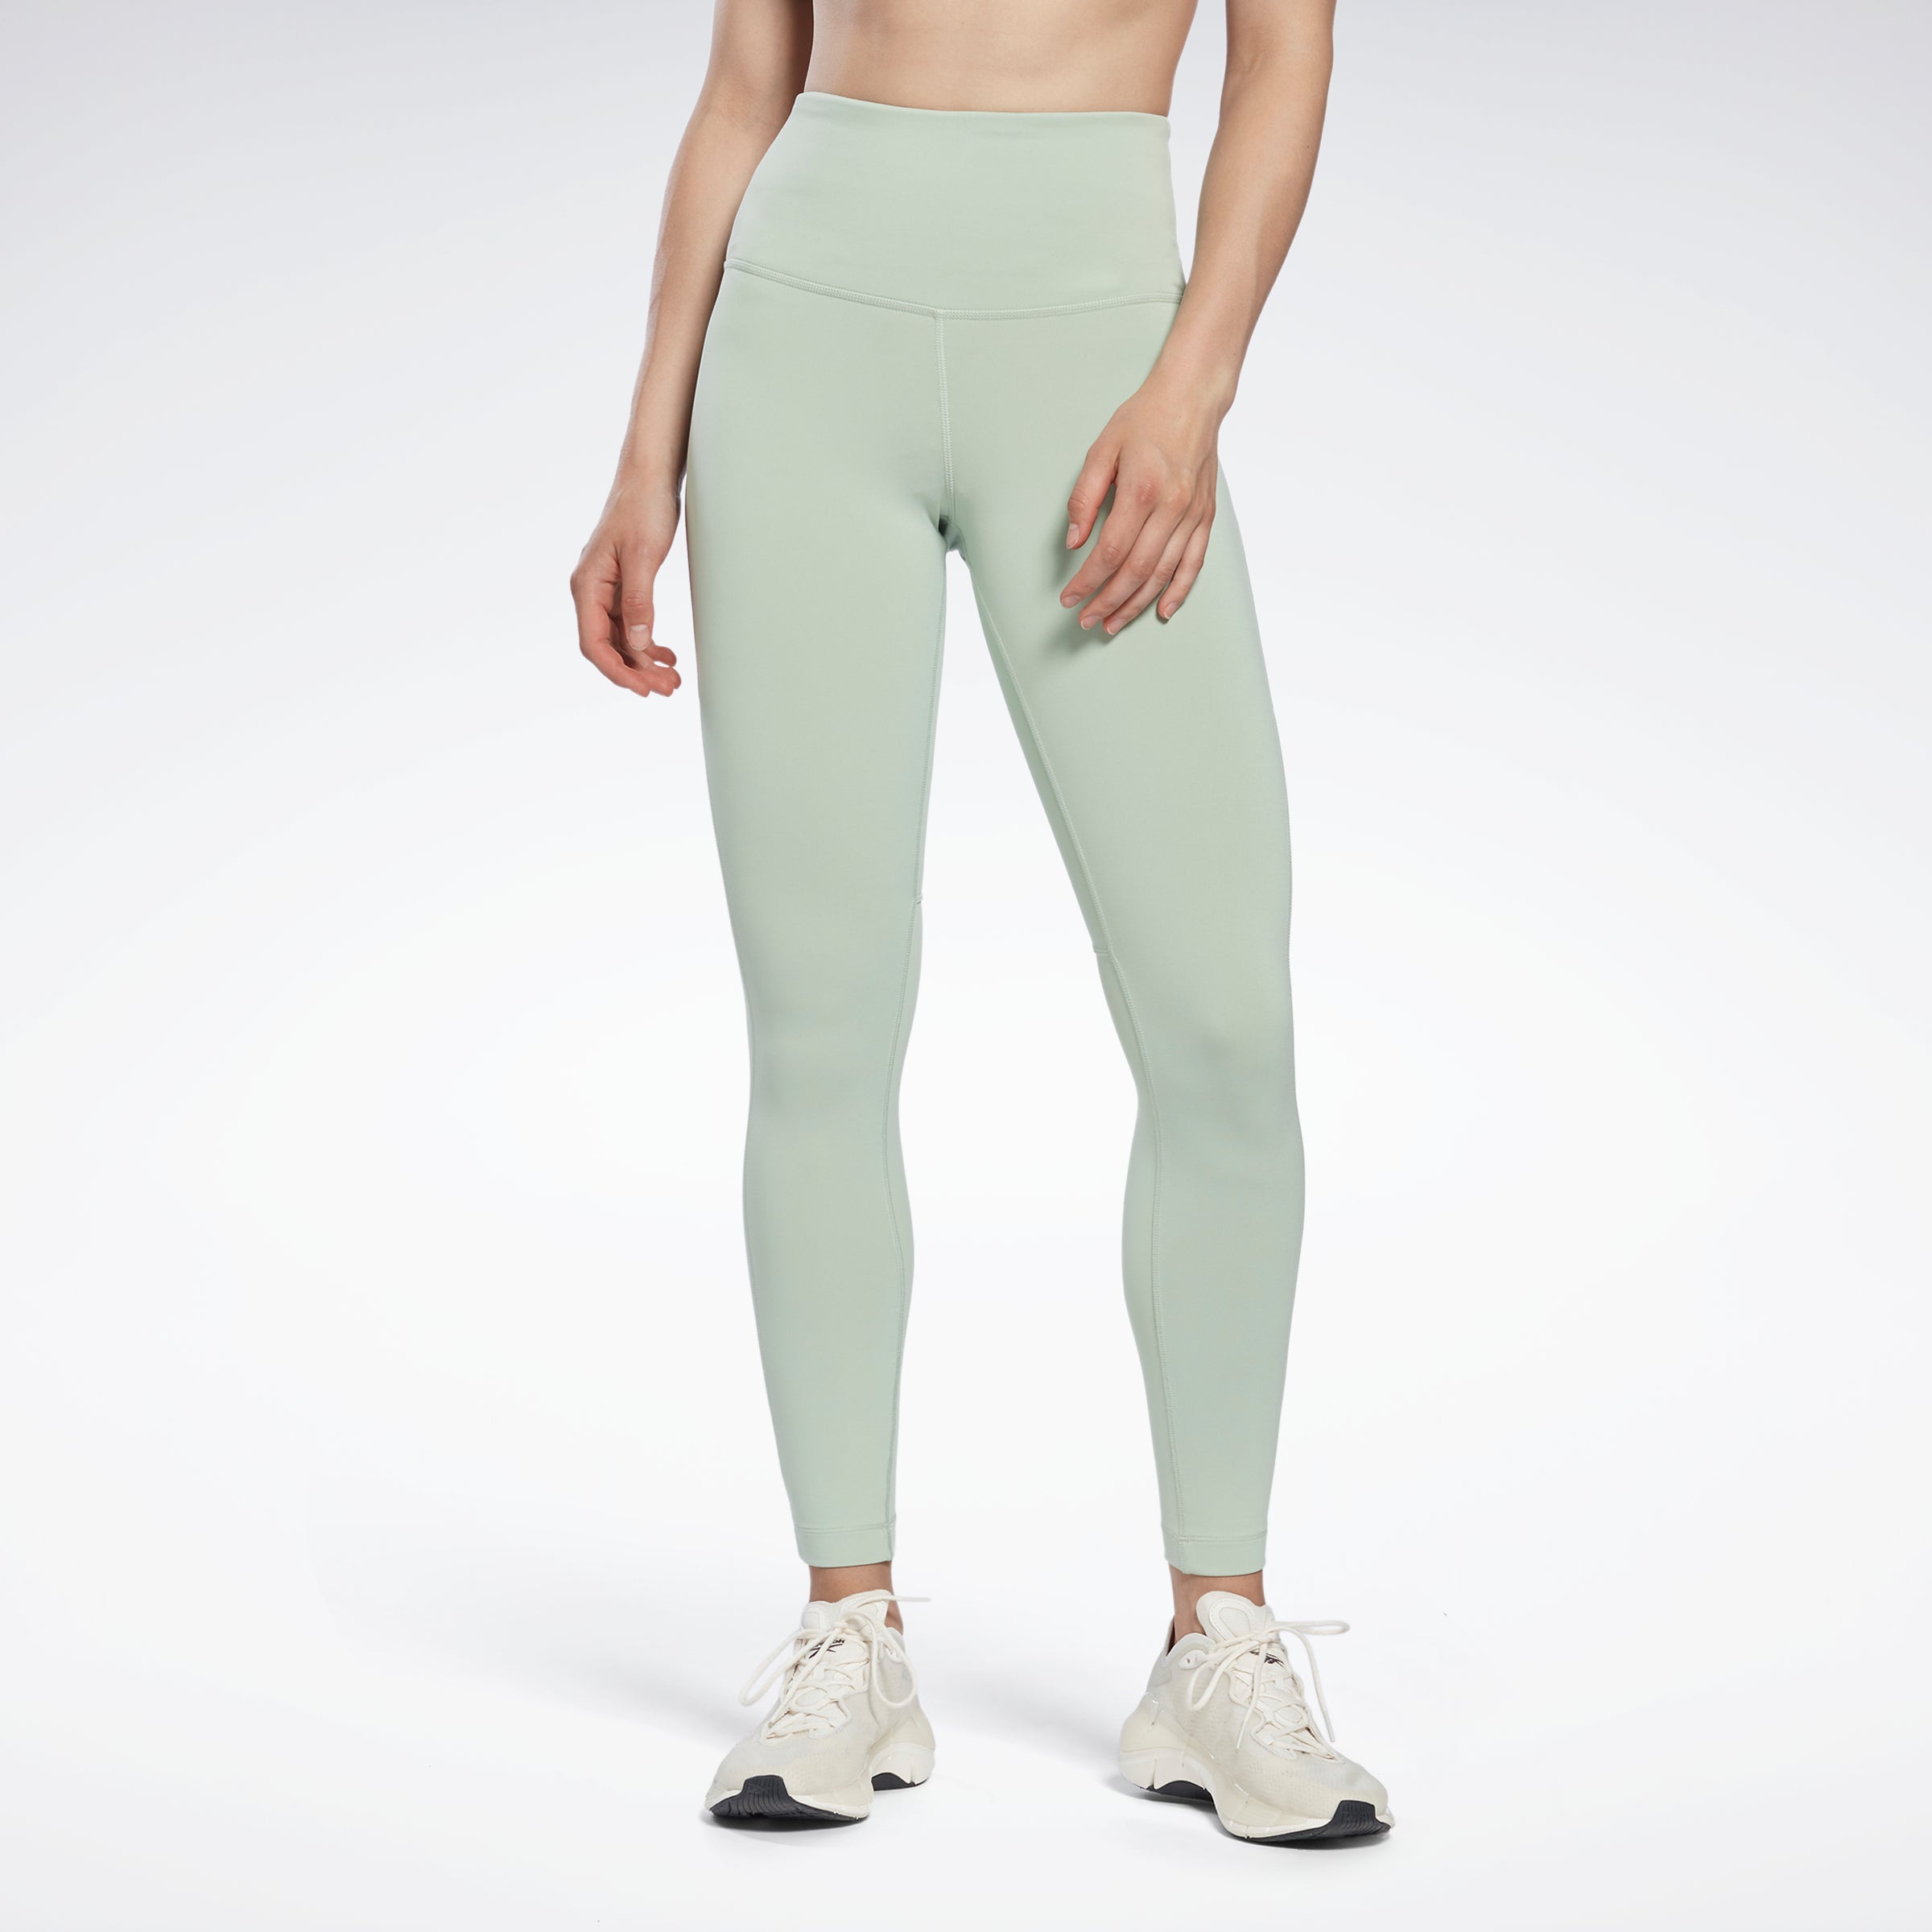 Gym Yoga Running Legging For Women Zip Pocket (Teal) – ReDesign Sports